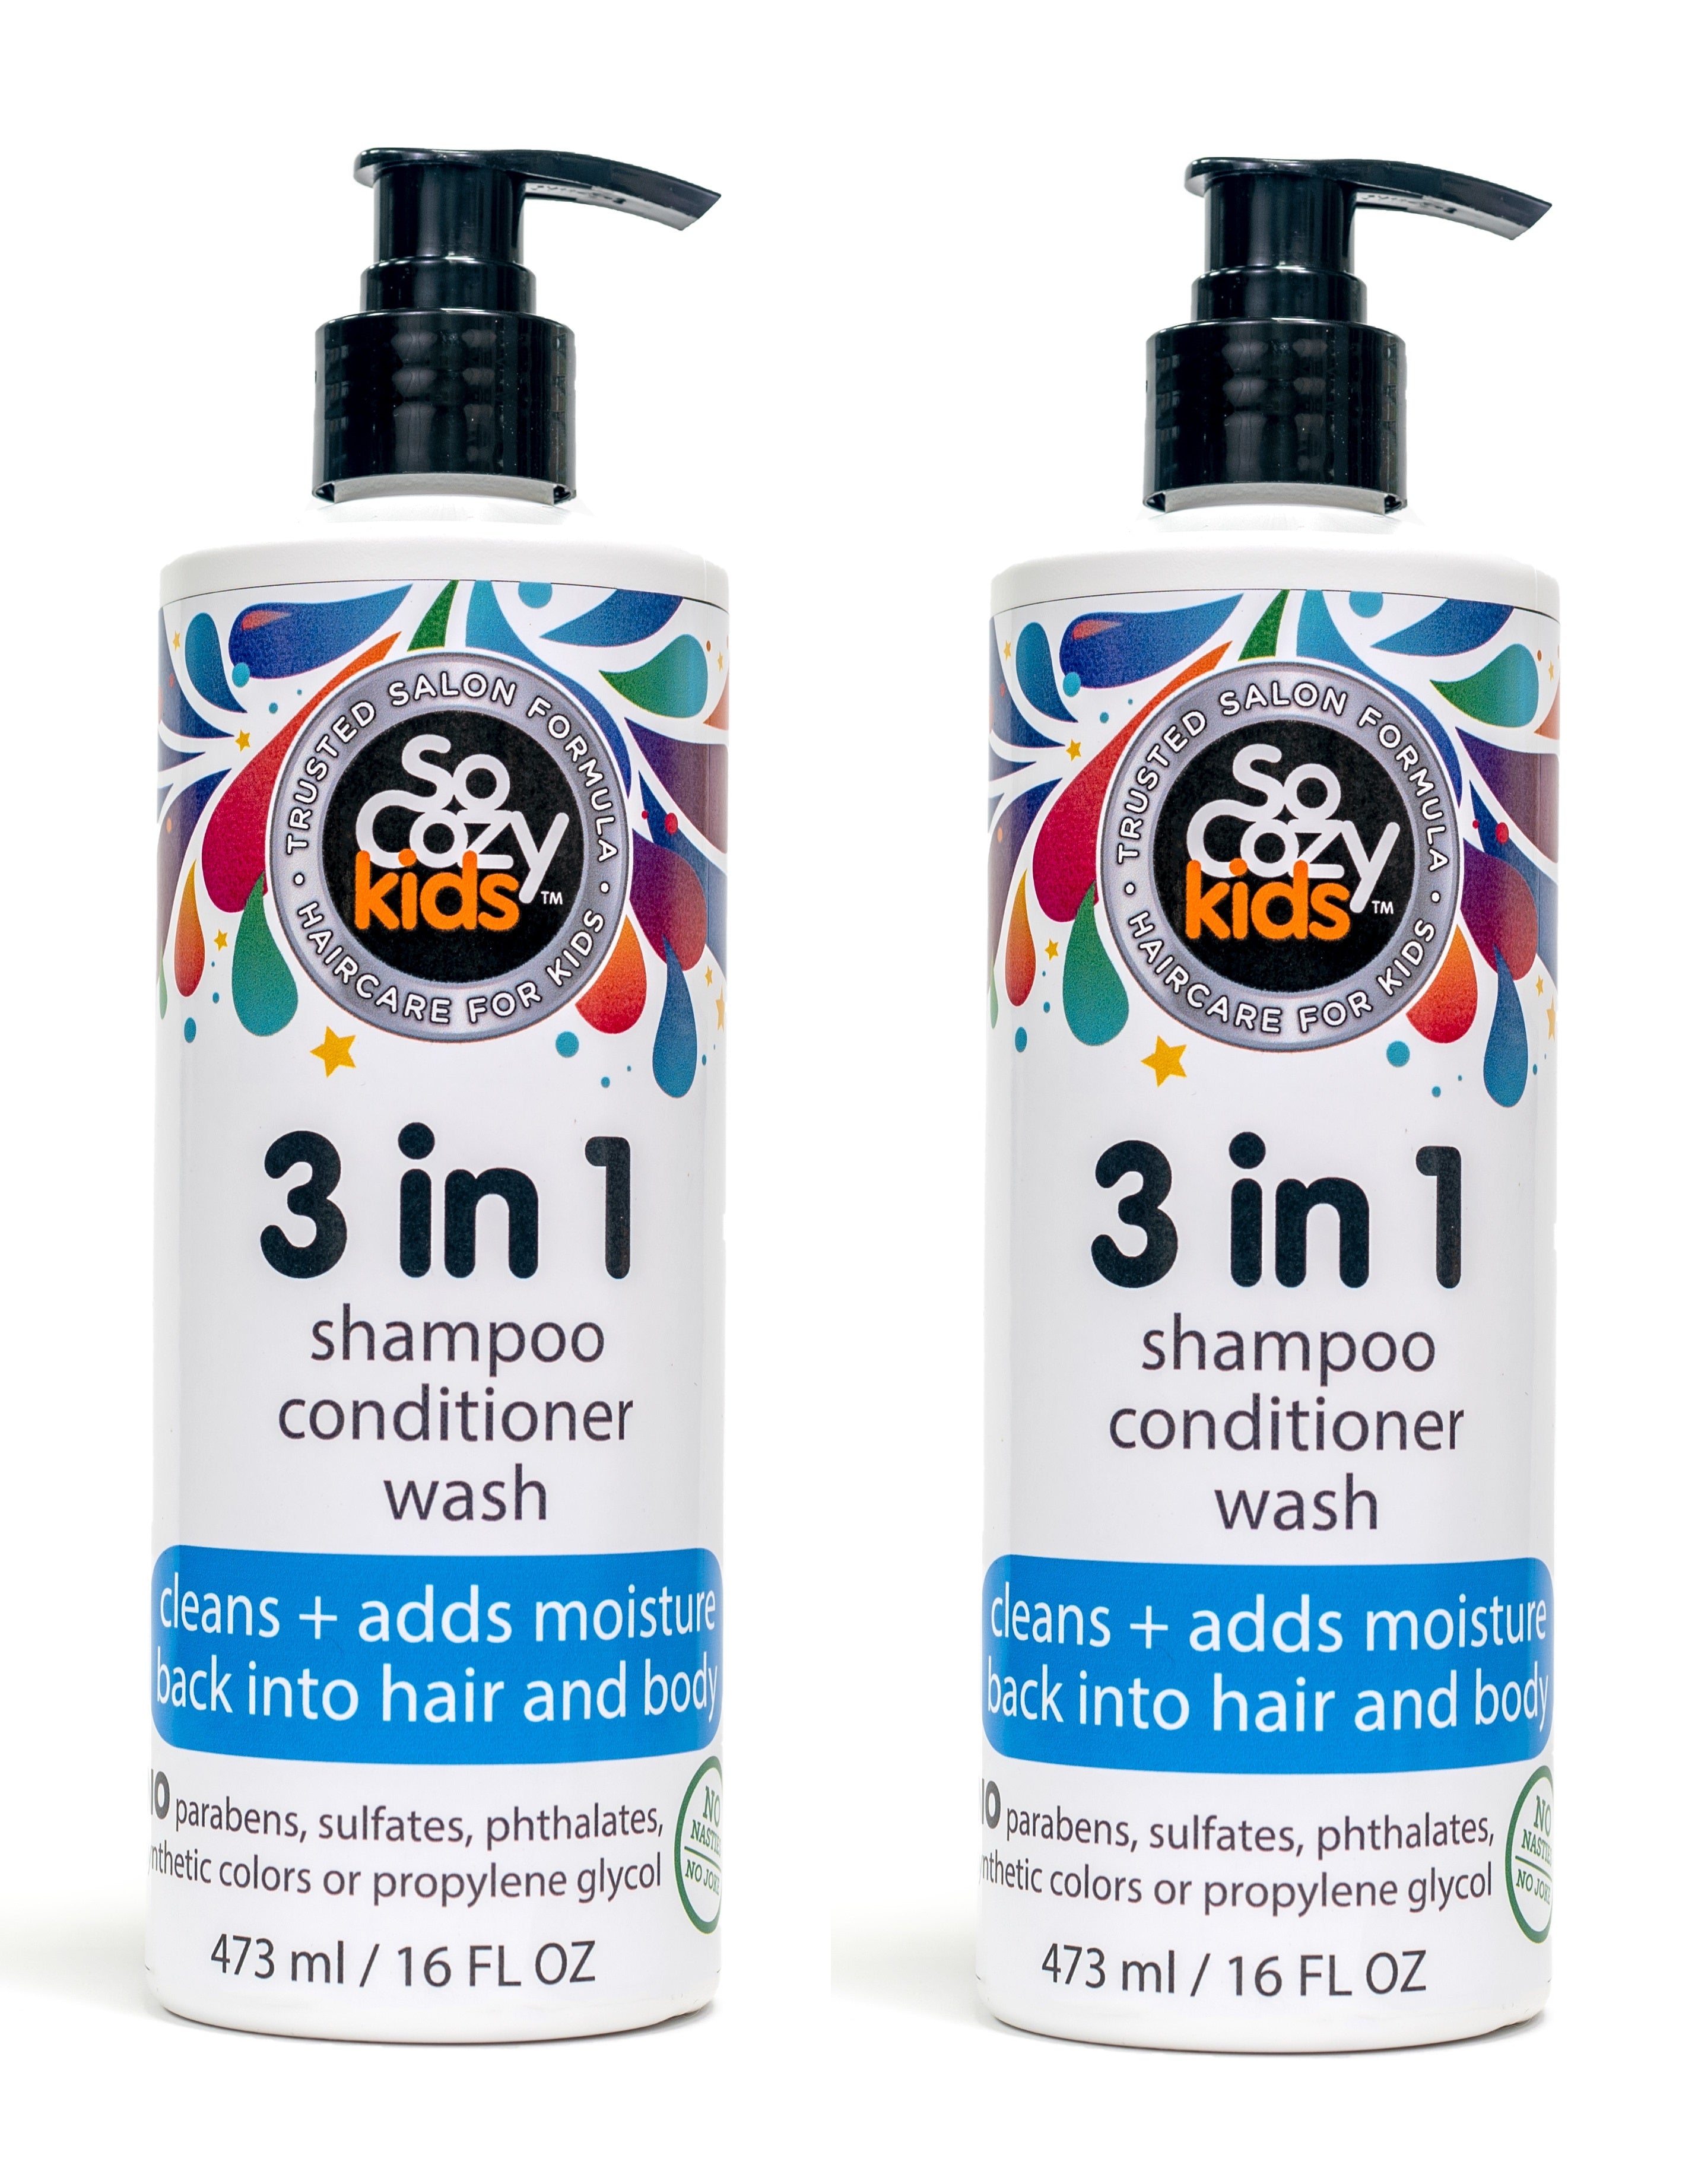 SoCozy 3-in-1 (Shampoo, Conditioner, Body oz 2 pack